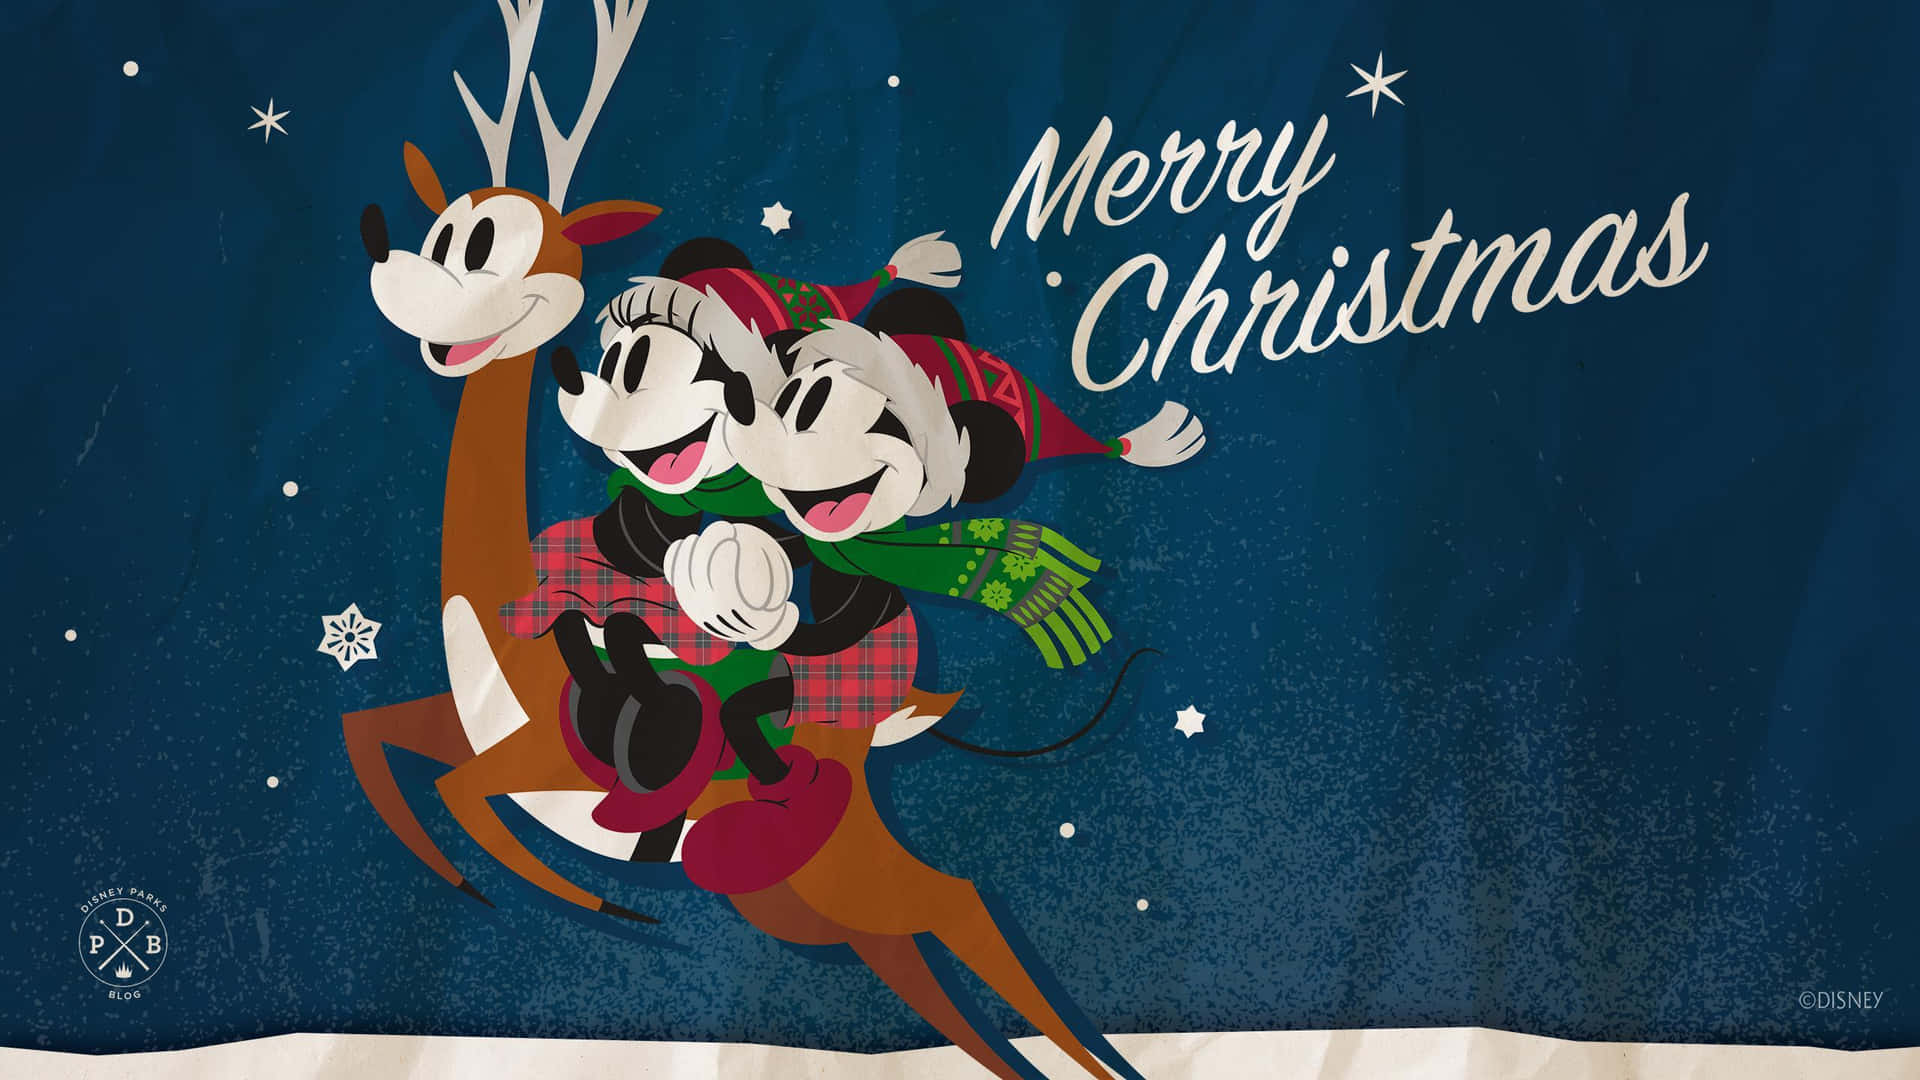 Start a Magical Holiday Season with Disney Christmas!